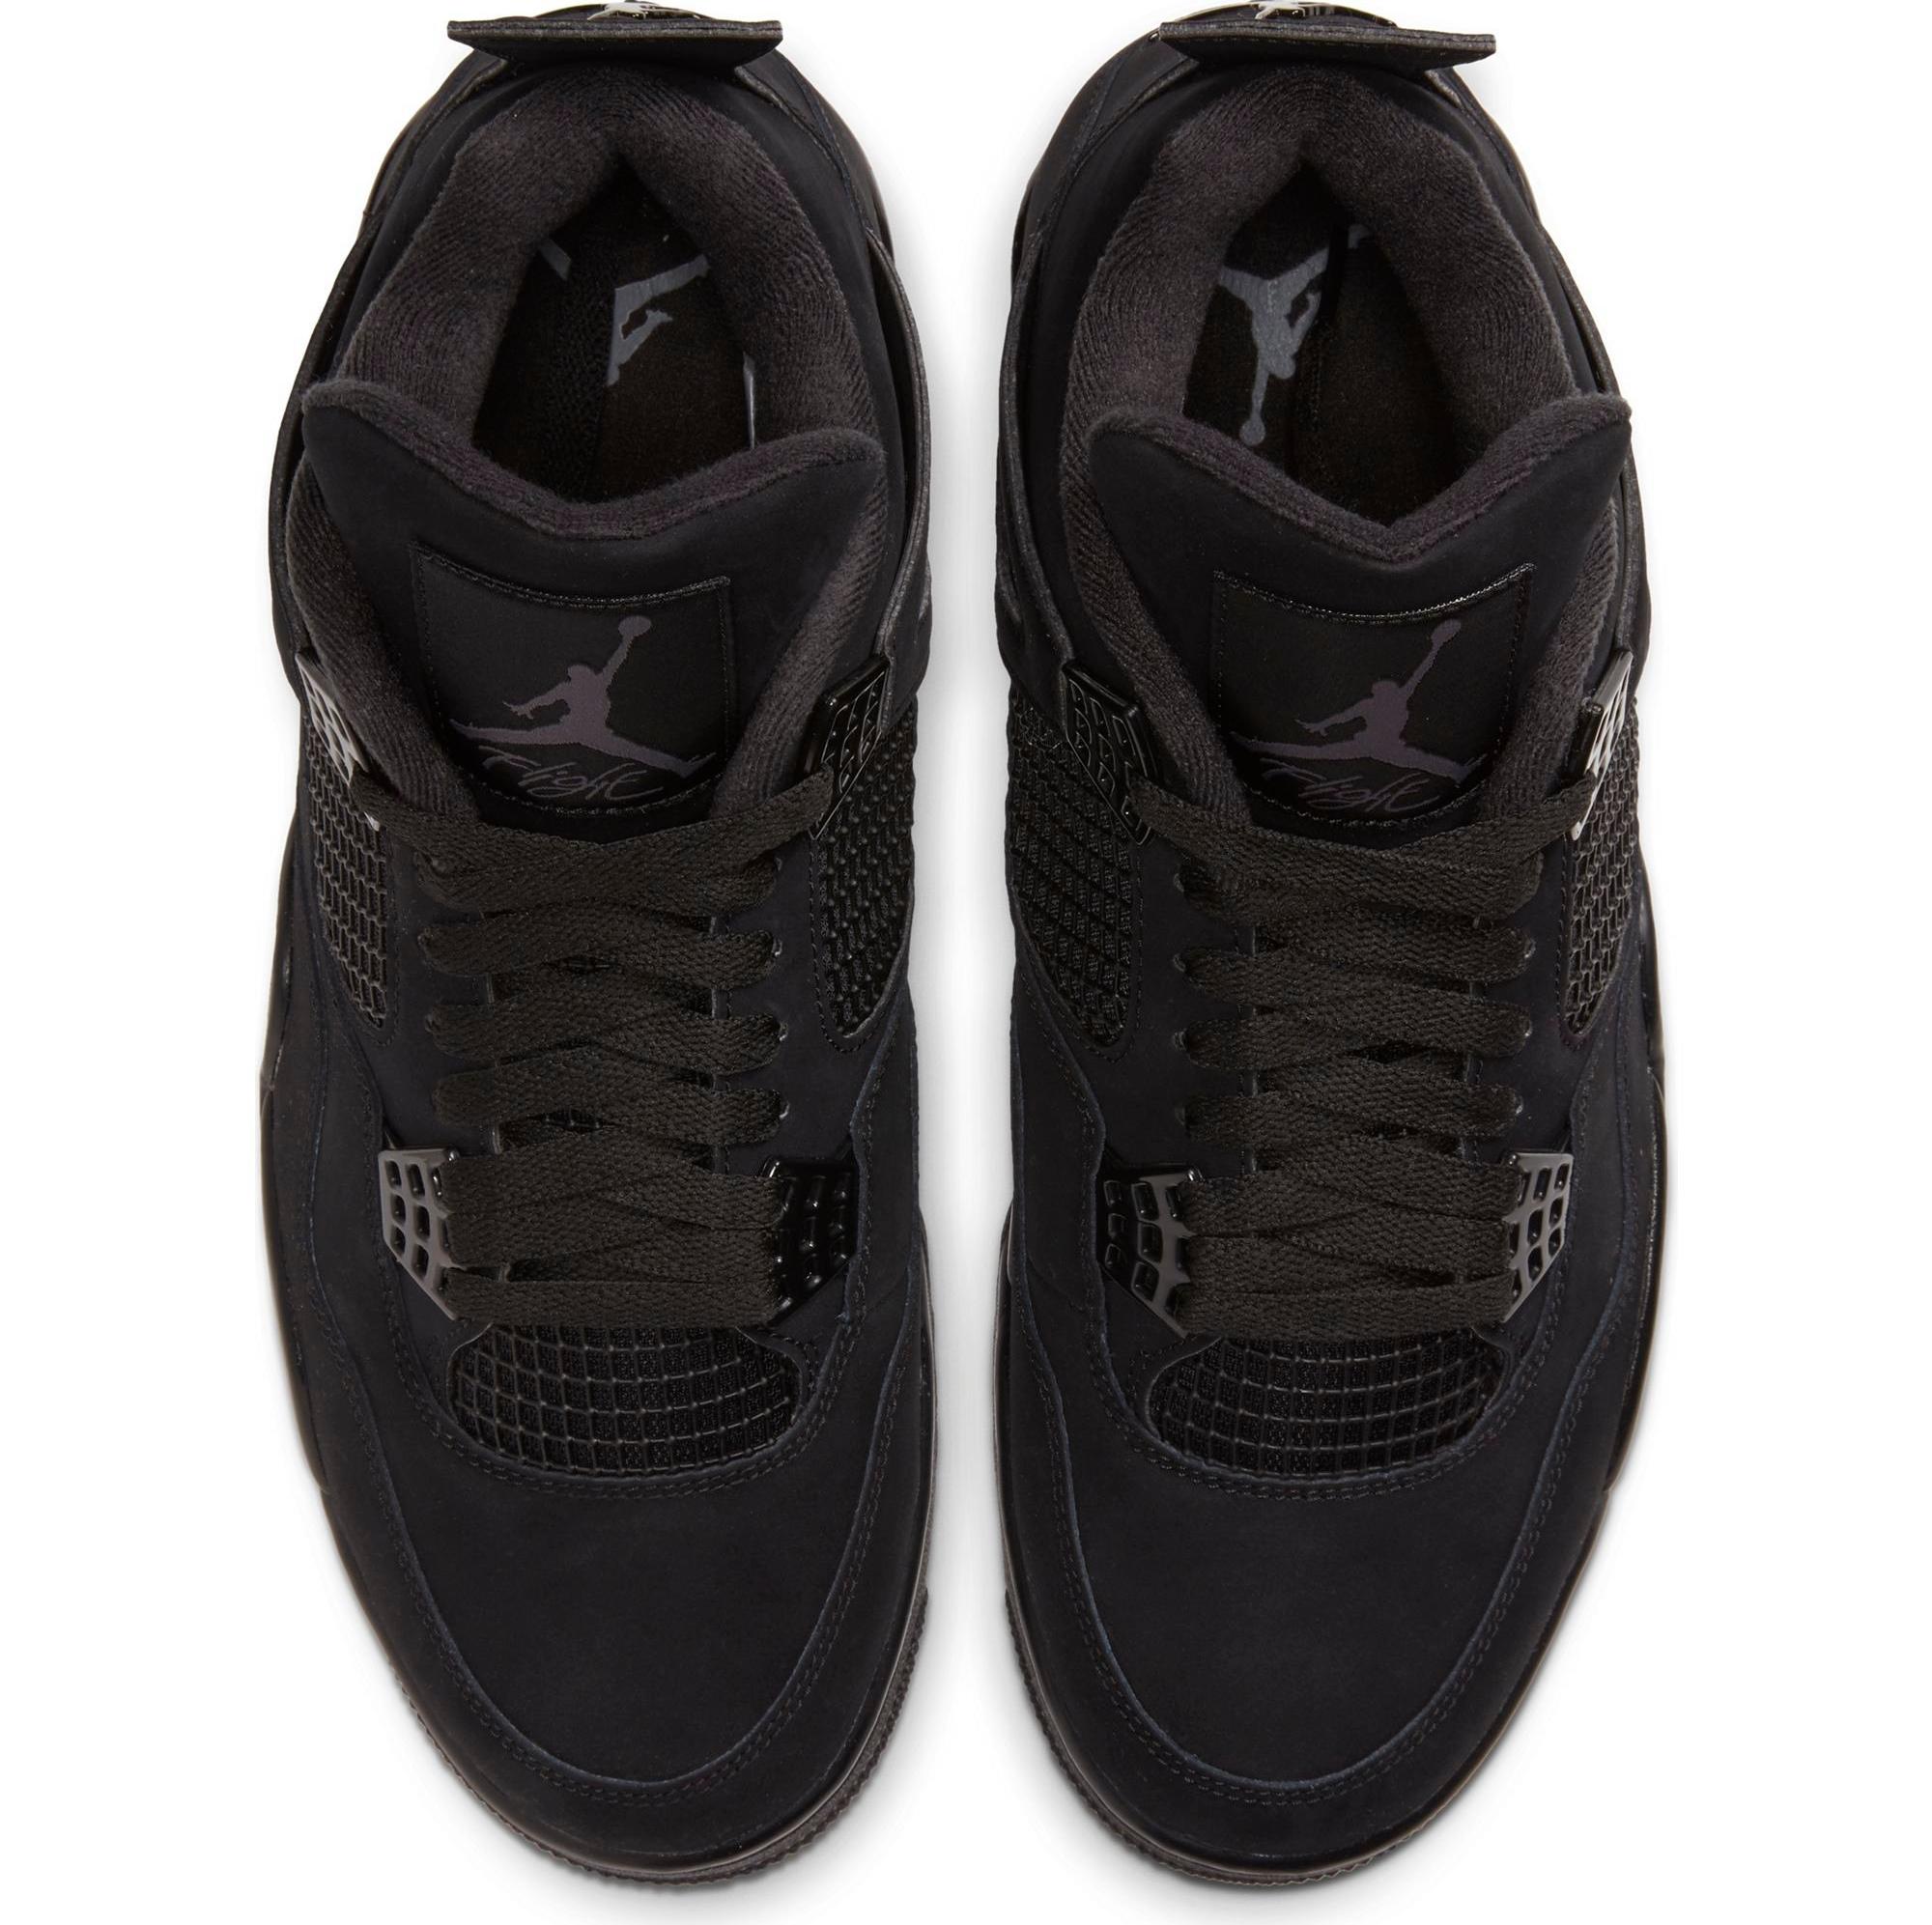 affældige sti Profit Sneakers Release – Air Jordan 4 Retro “Black Cat” Black/Black-Light  Graphite Colorway